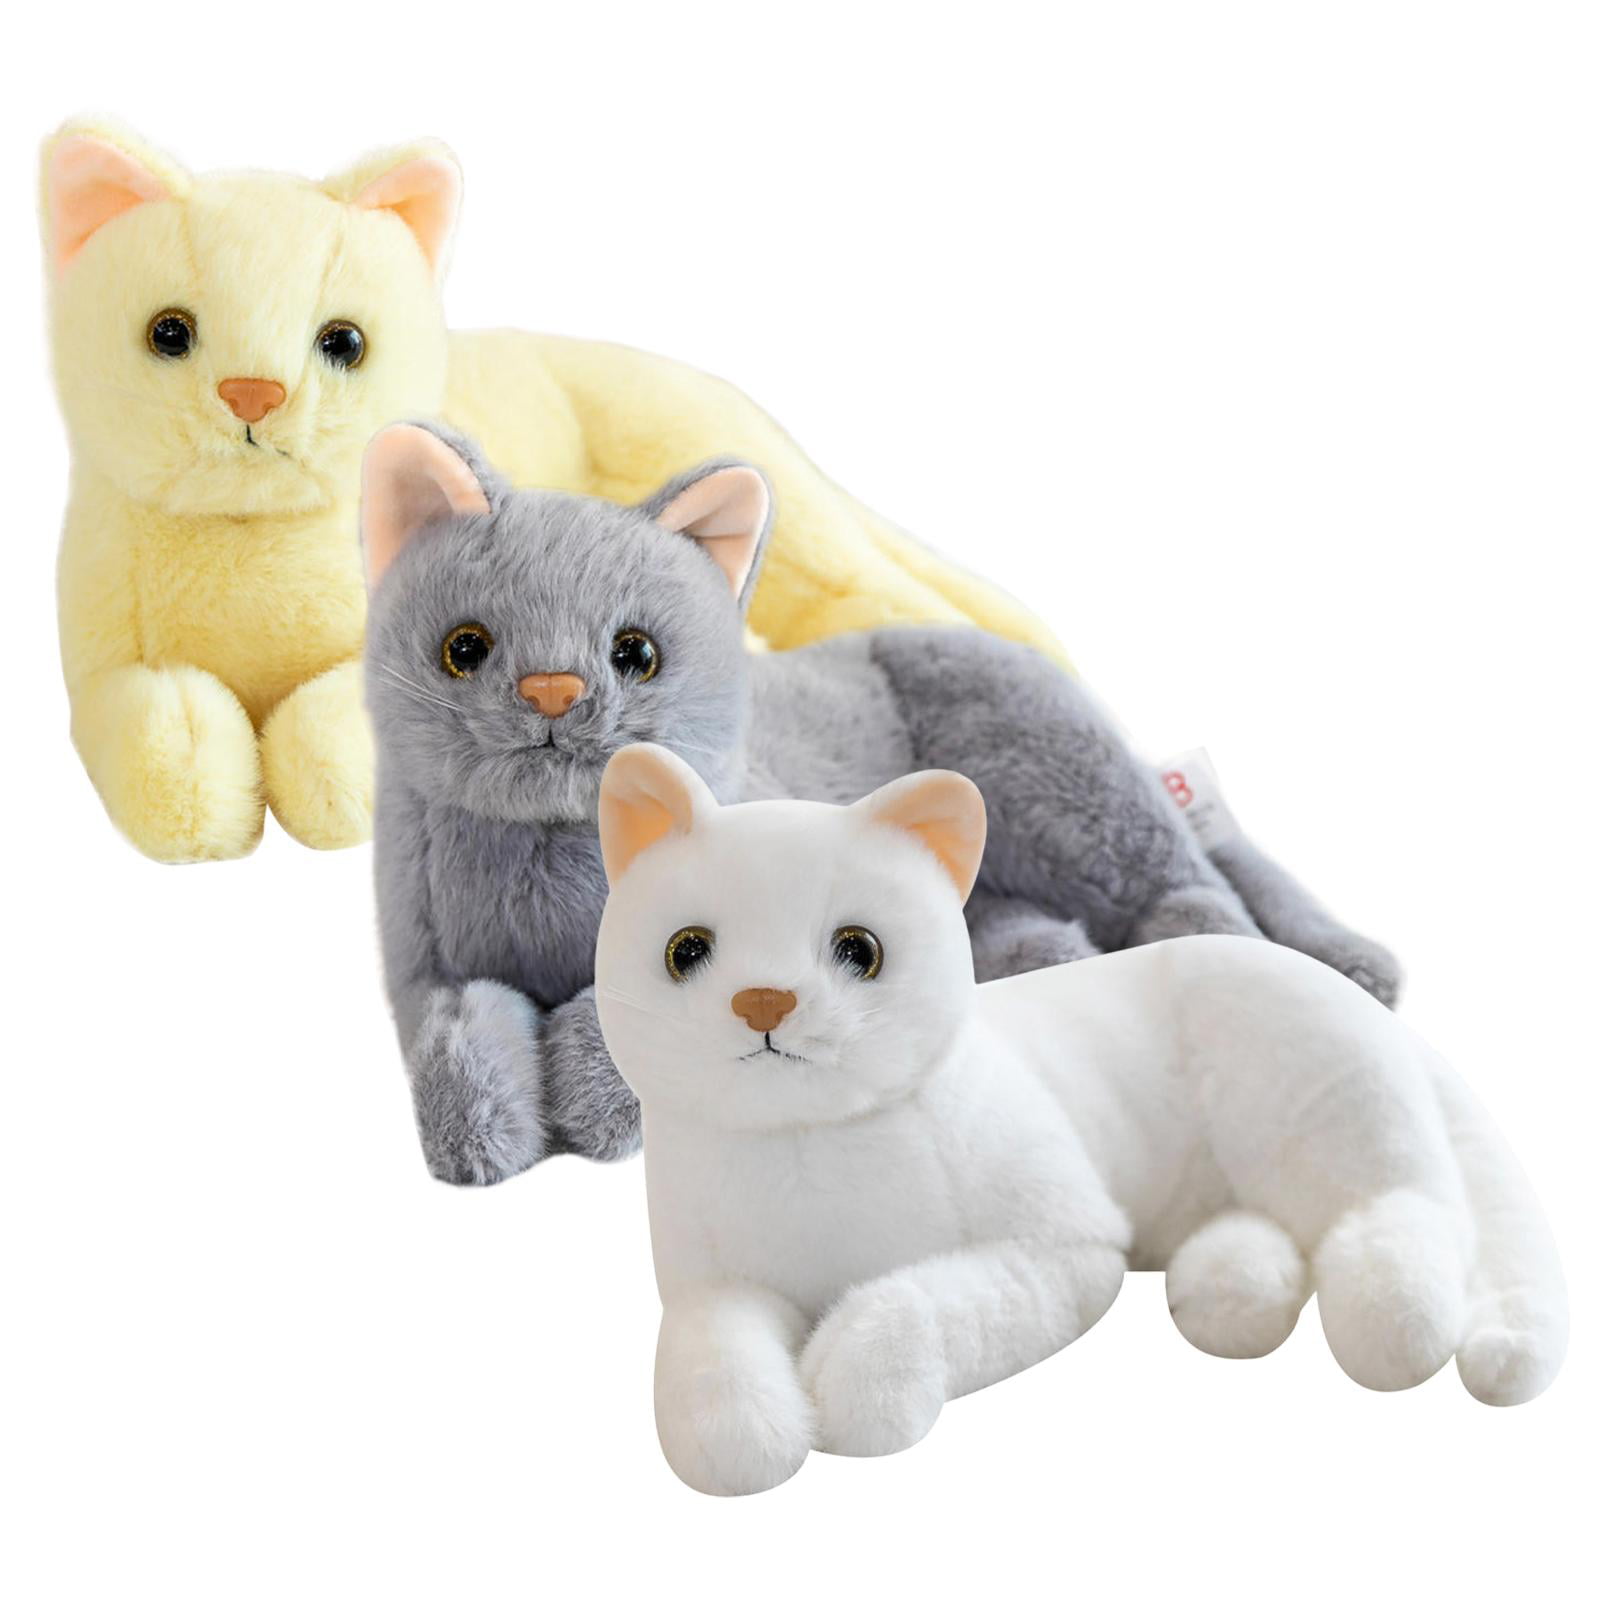 Simulation Cat Toy Plush Animal Toy Stuffed Cat Home Decor White 